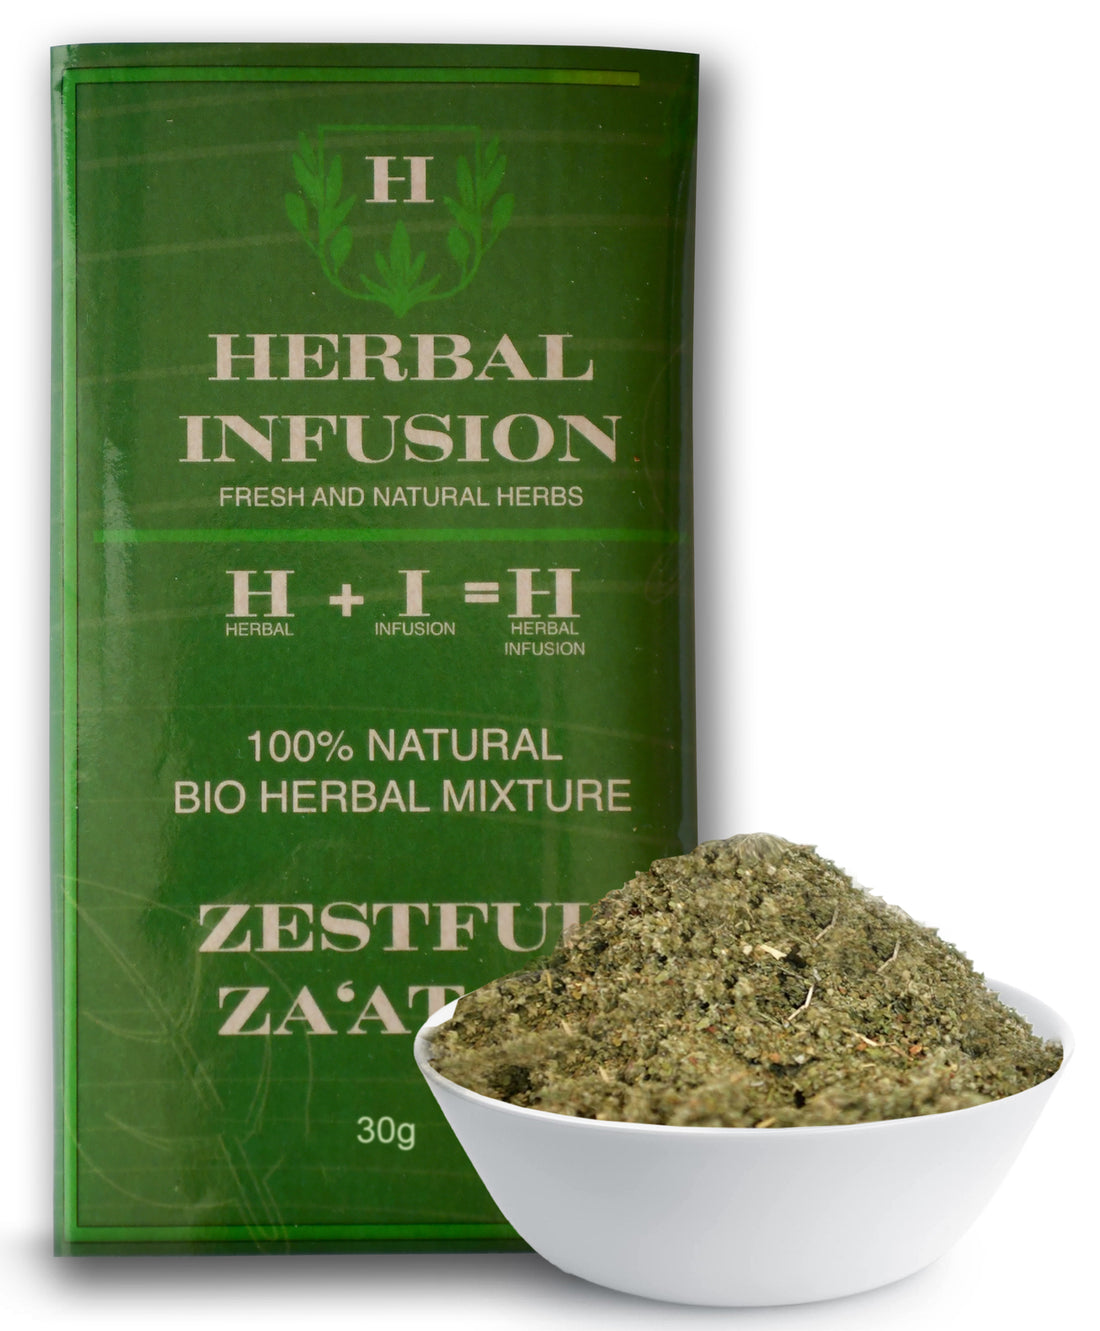 Zestful Zaatar 1 Pack – Herbal Infusion